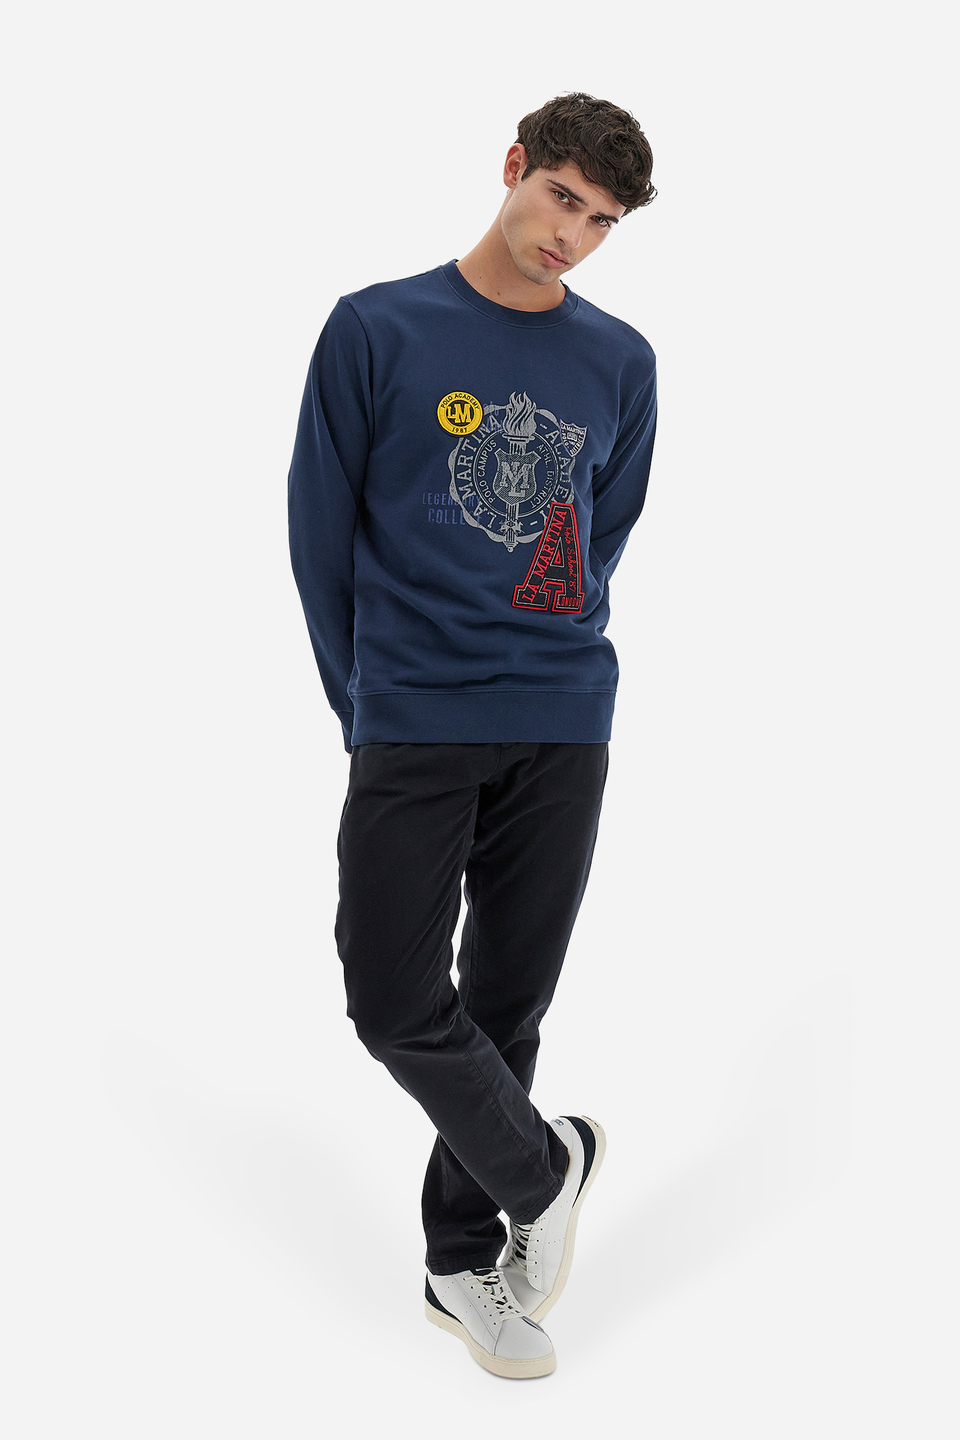 Polo Academy men's full-zip crewneck sweatshirt in solid color with large logo - Vander | La Martina - Official Online Shop